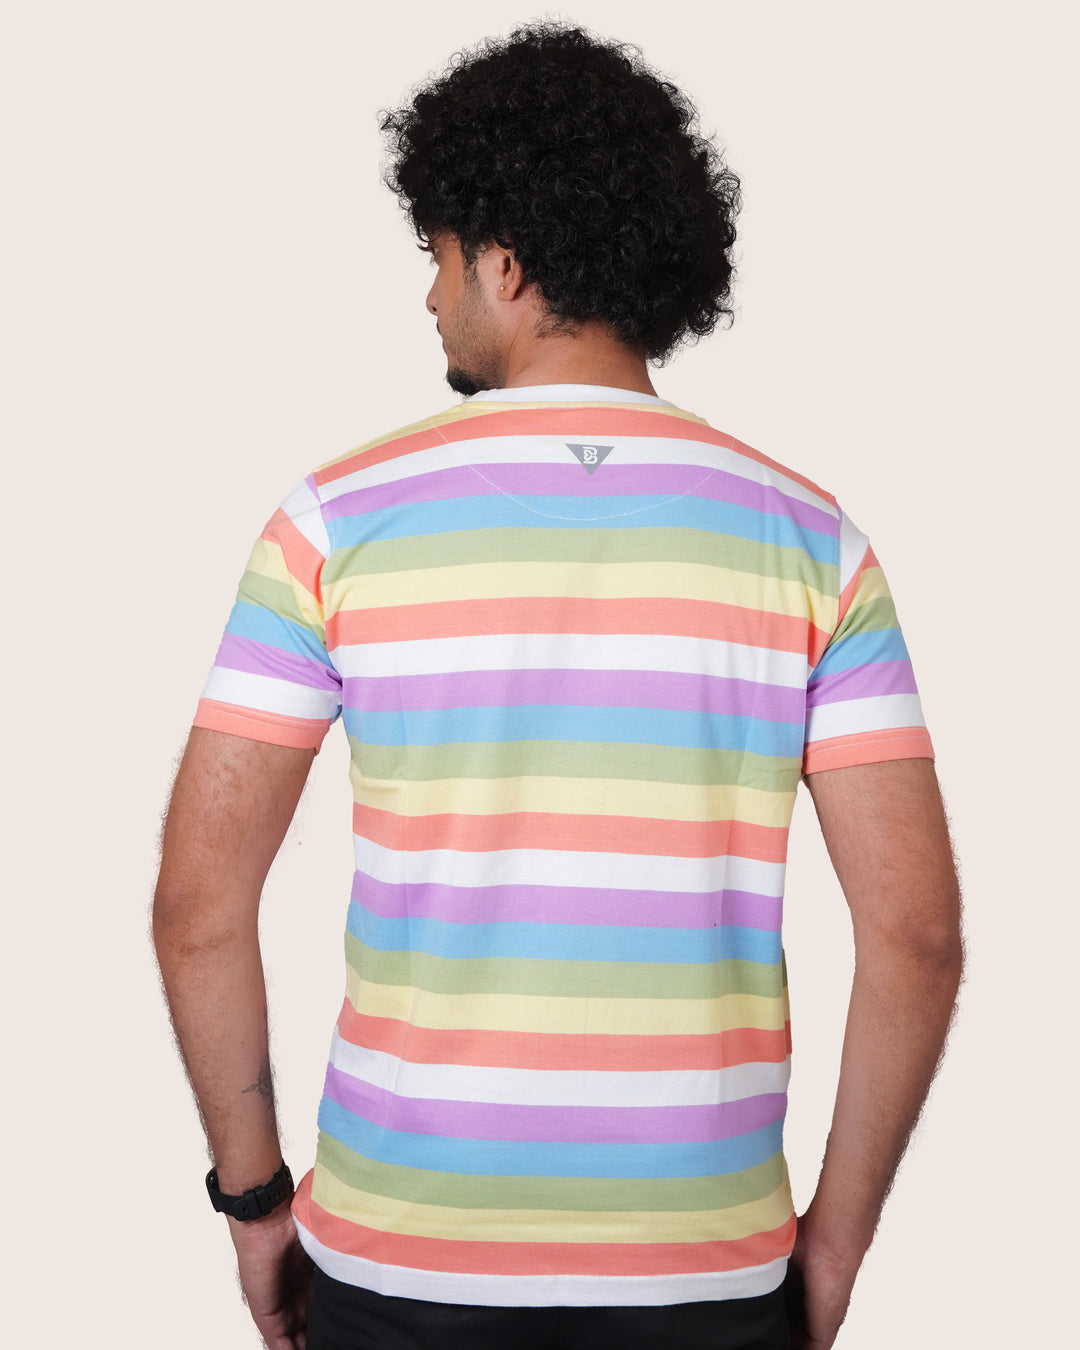 Feathersoft Home Comfort Men's Crewneck T-Shirt: Rainbow Stripe